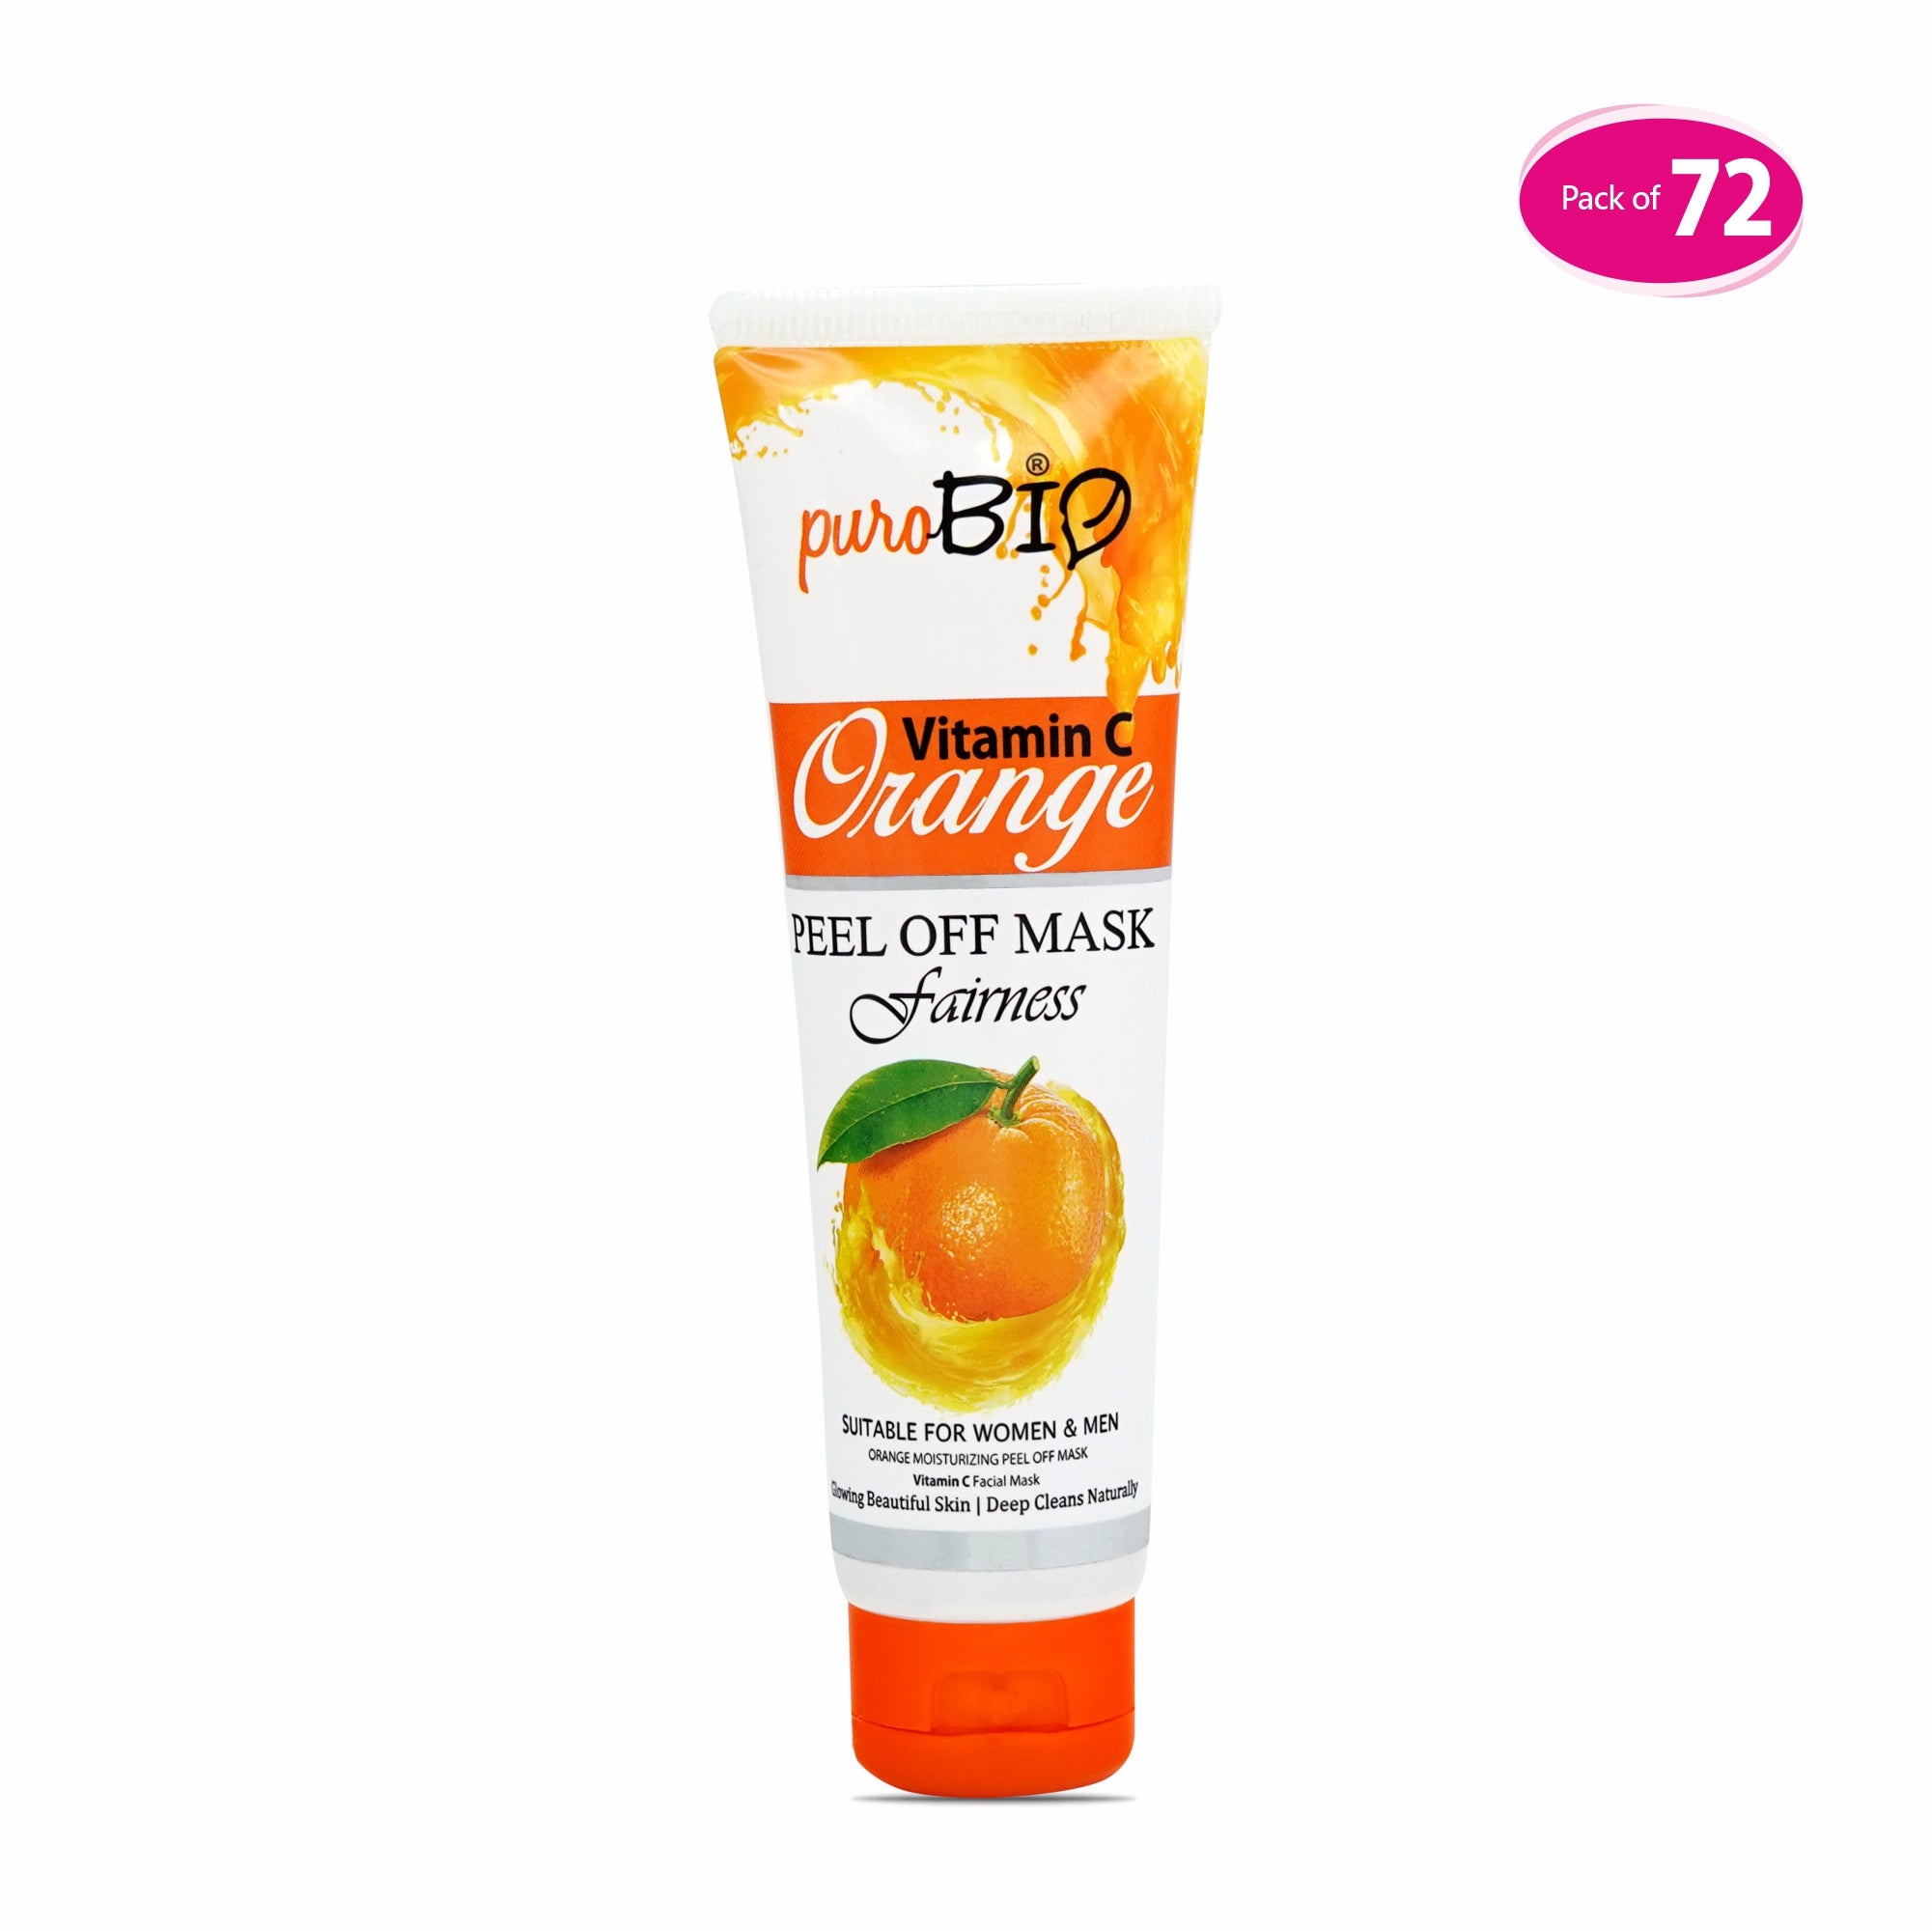 Vitamin-C Orange peel off mask in bulk 72 quantity